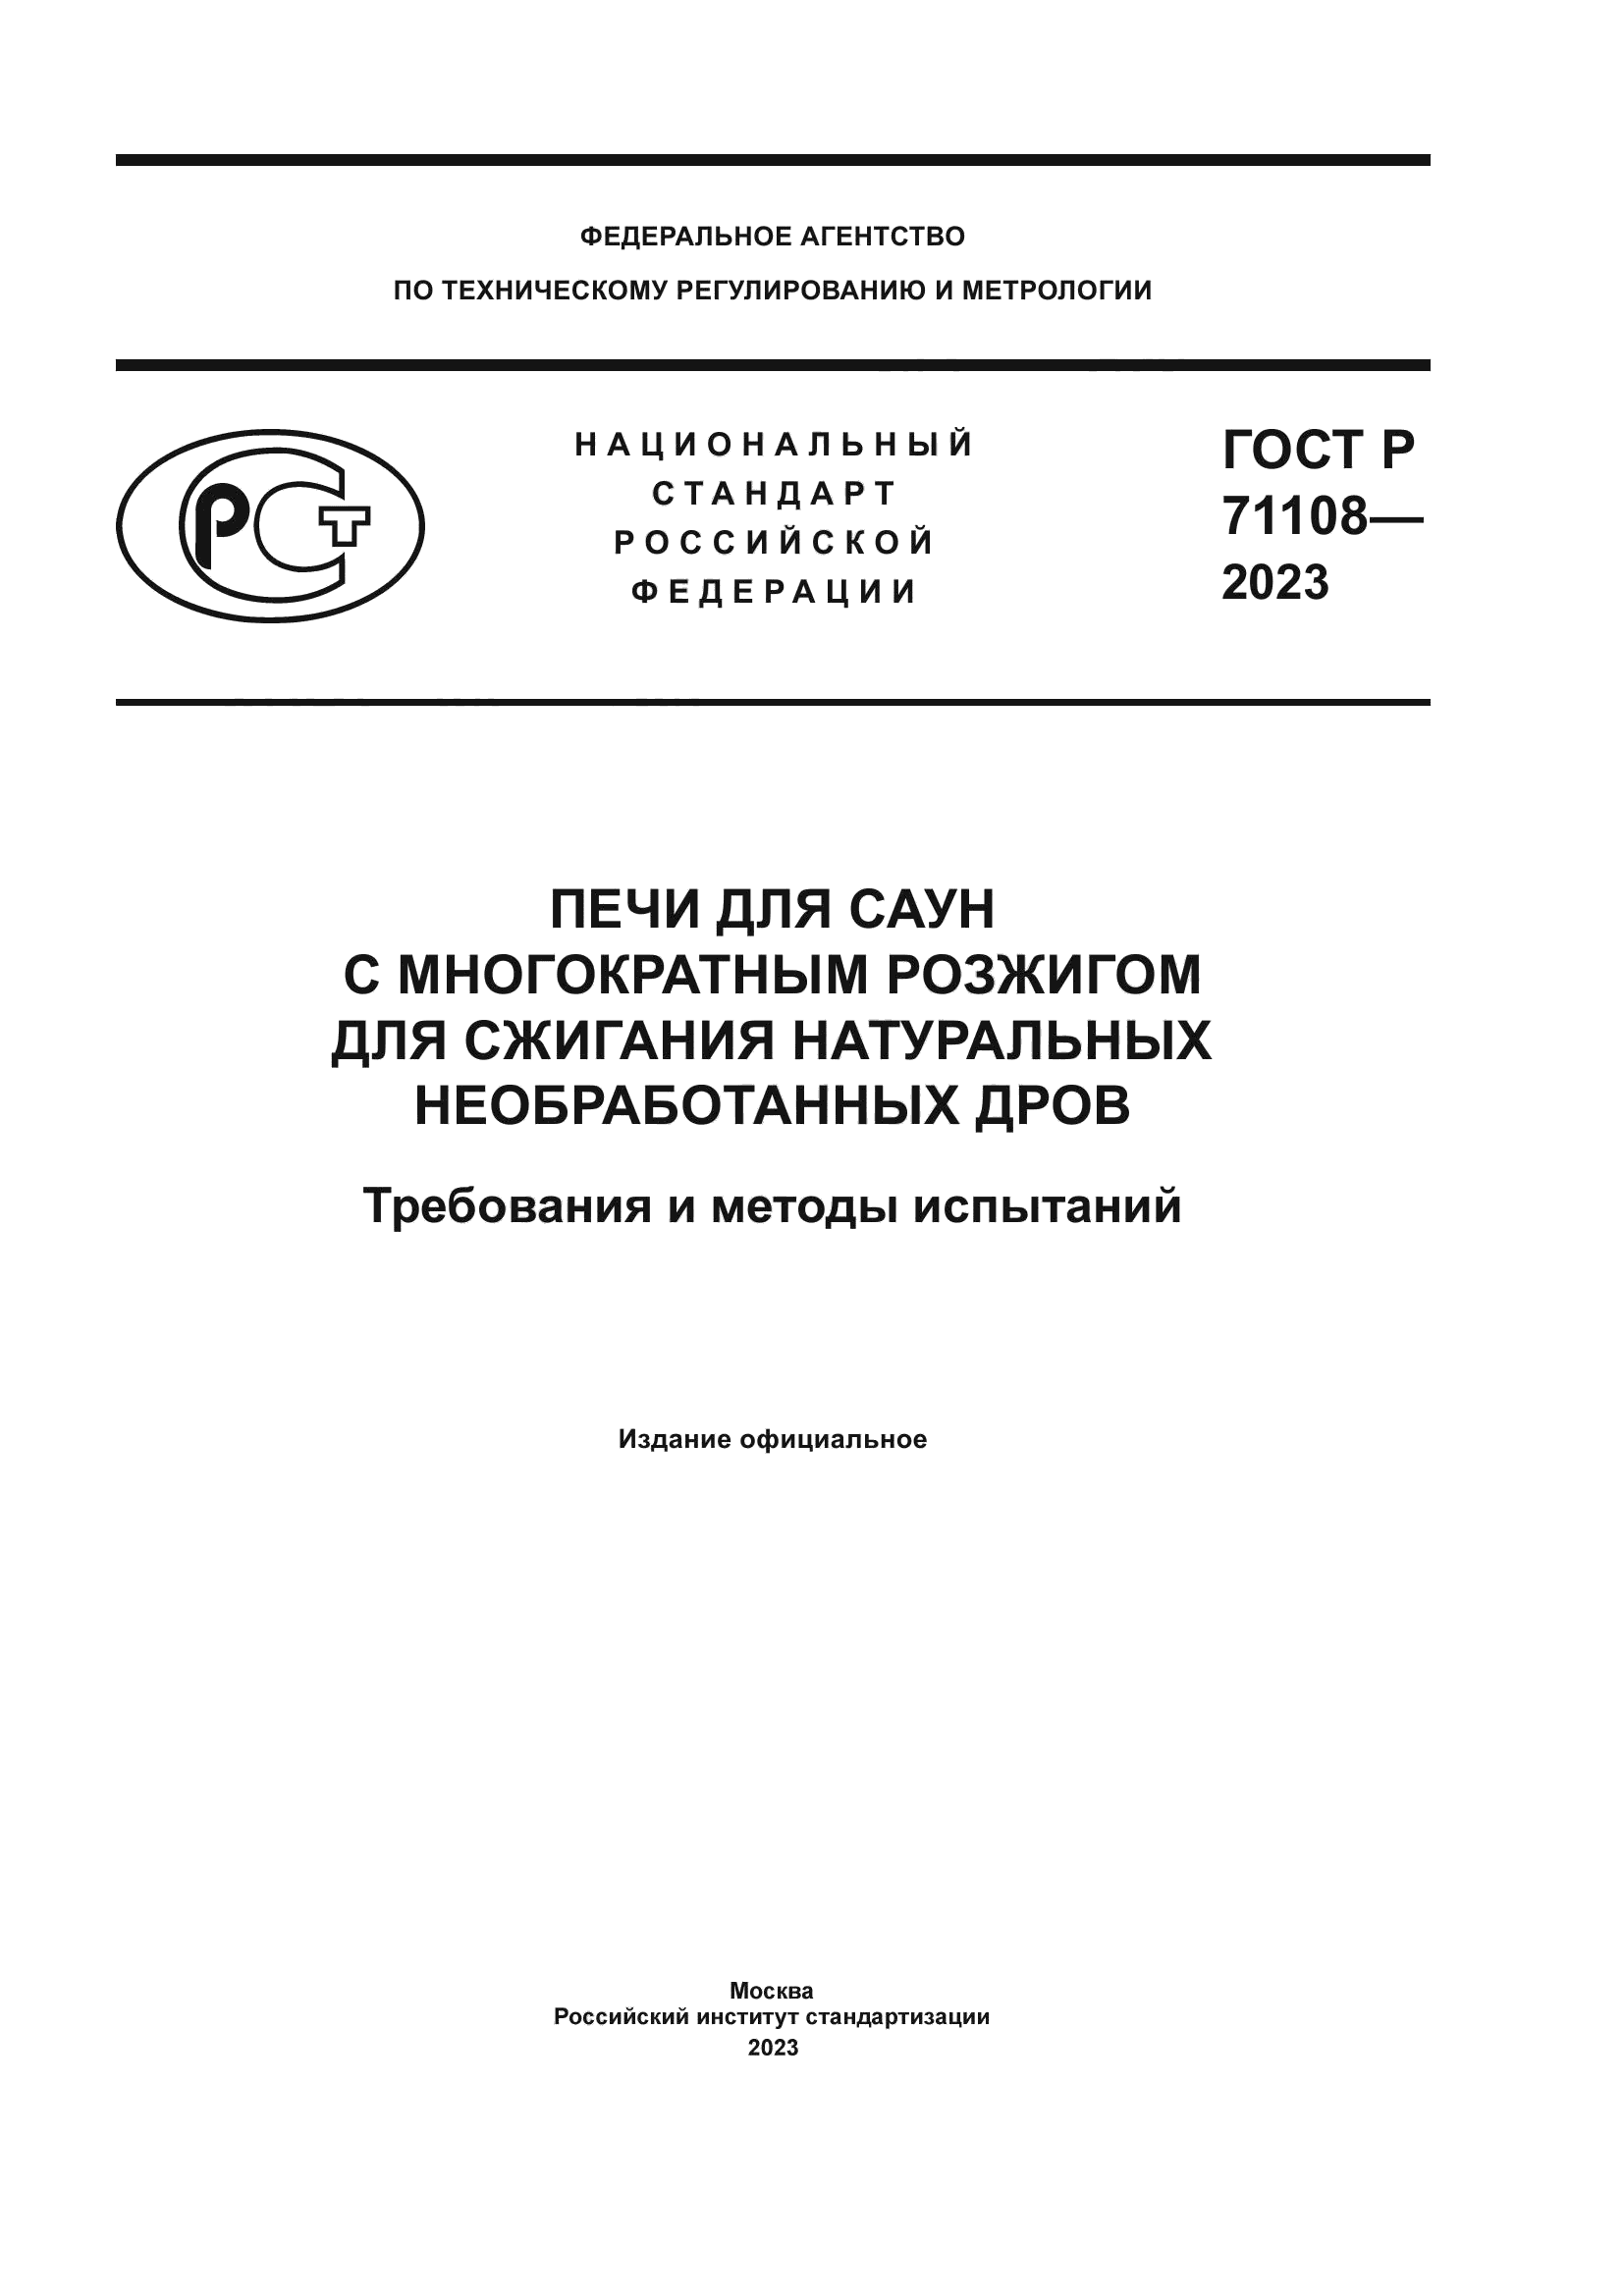 ГОСТ Р 71108-2023